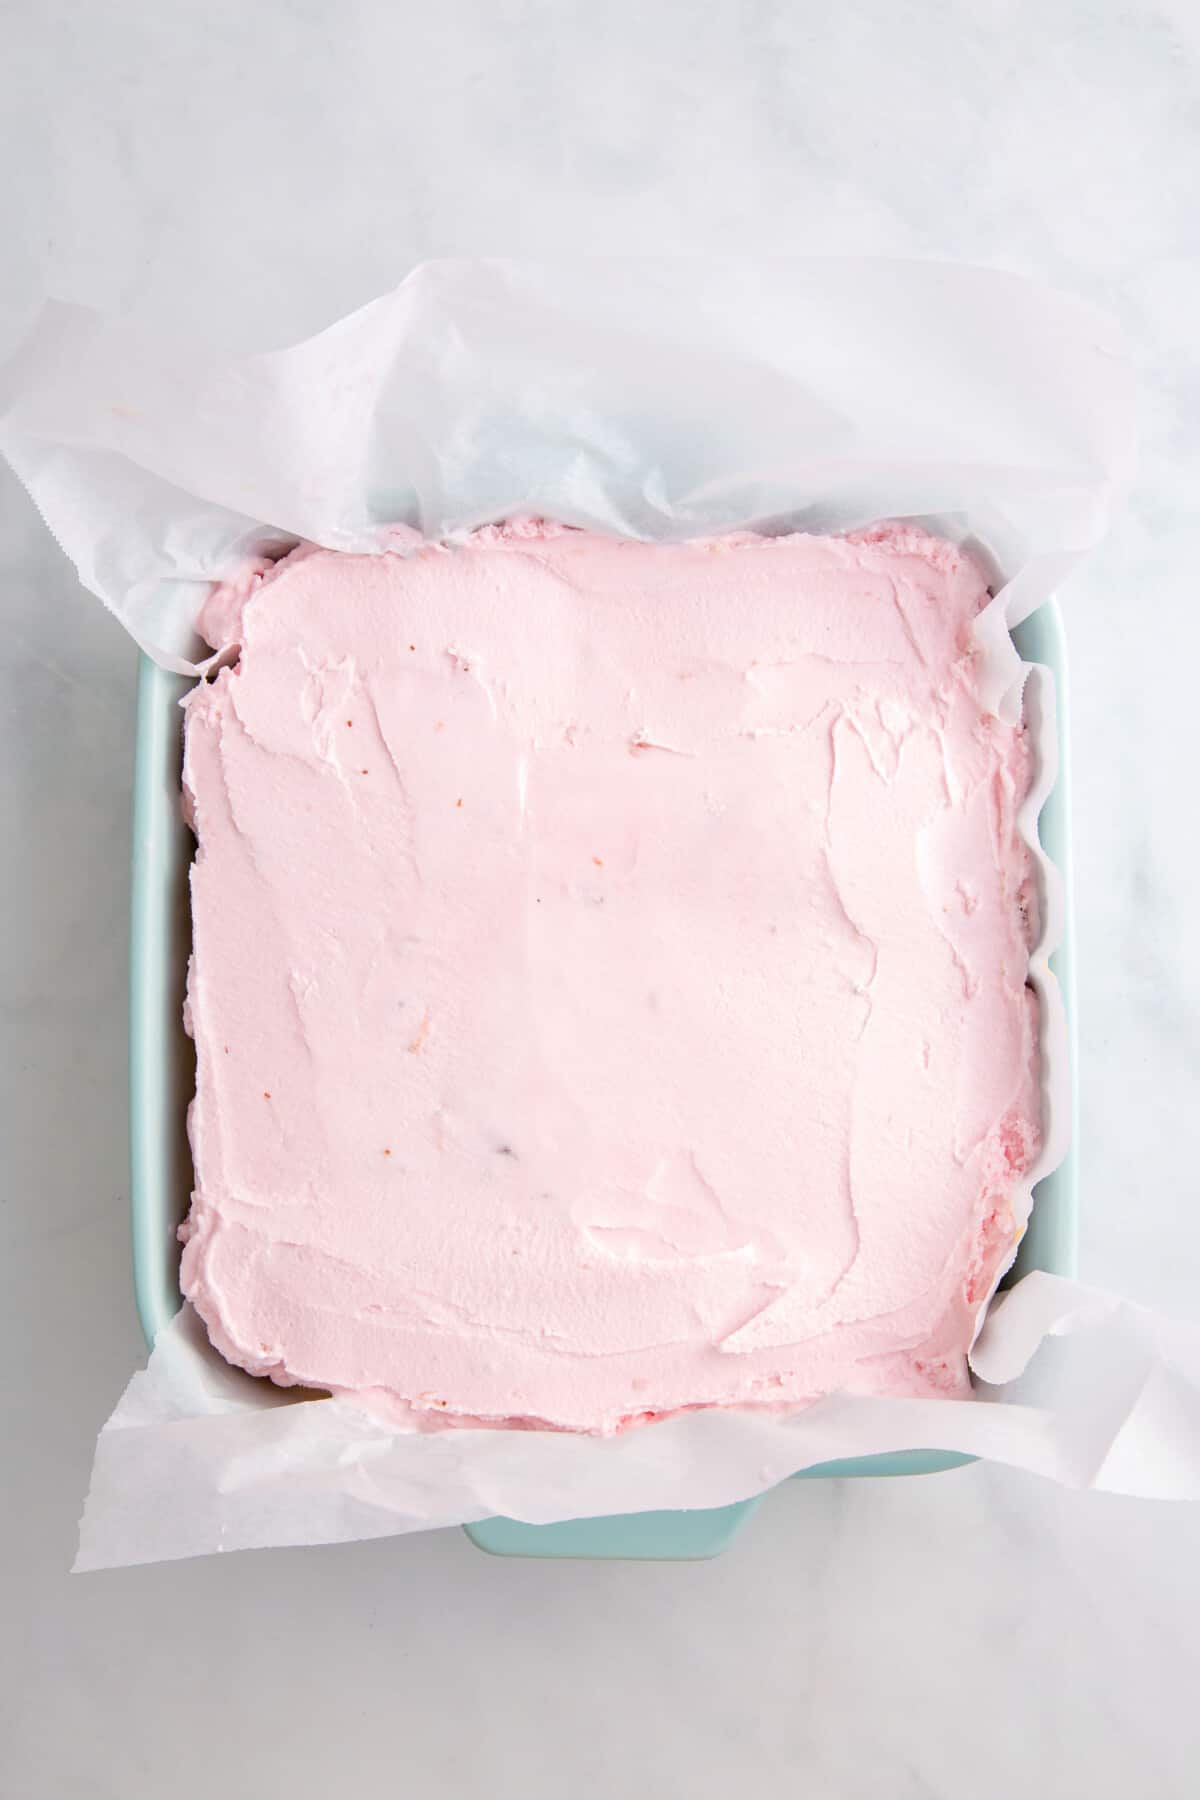 strawberry ice cream layered on top of an 8x8 dish to make strawberry crunch ice cream cake